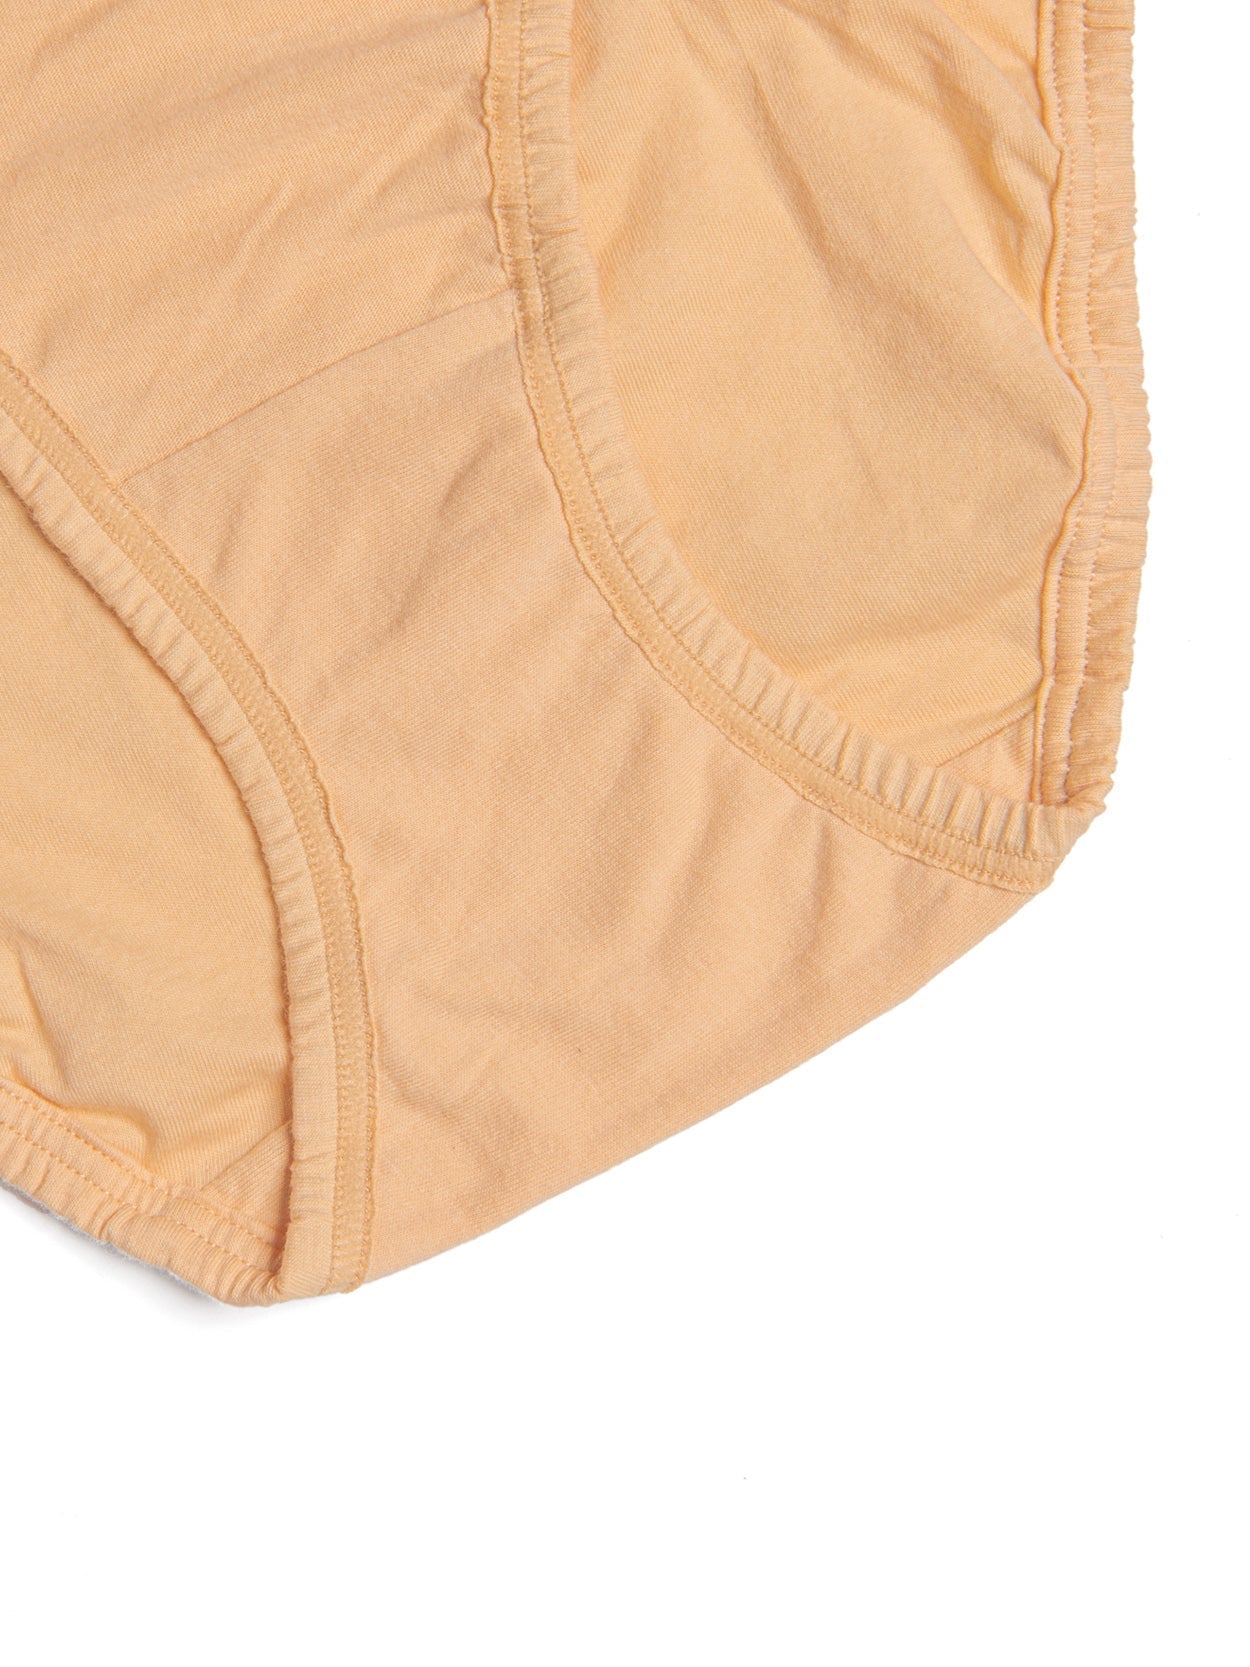 Cupid Beige Fullback Panty, XL · GAX Designs · Online Store